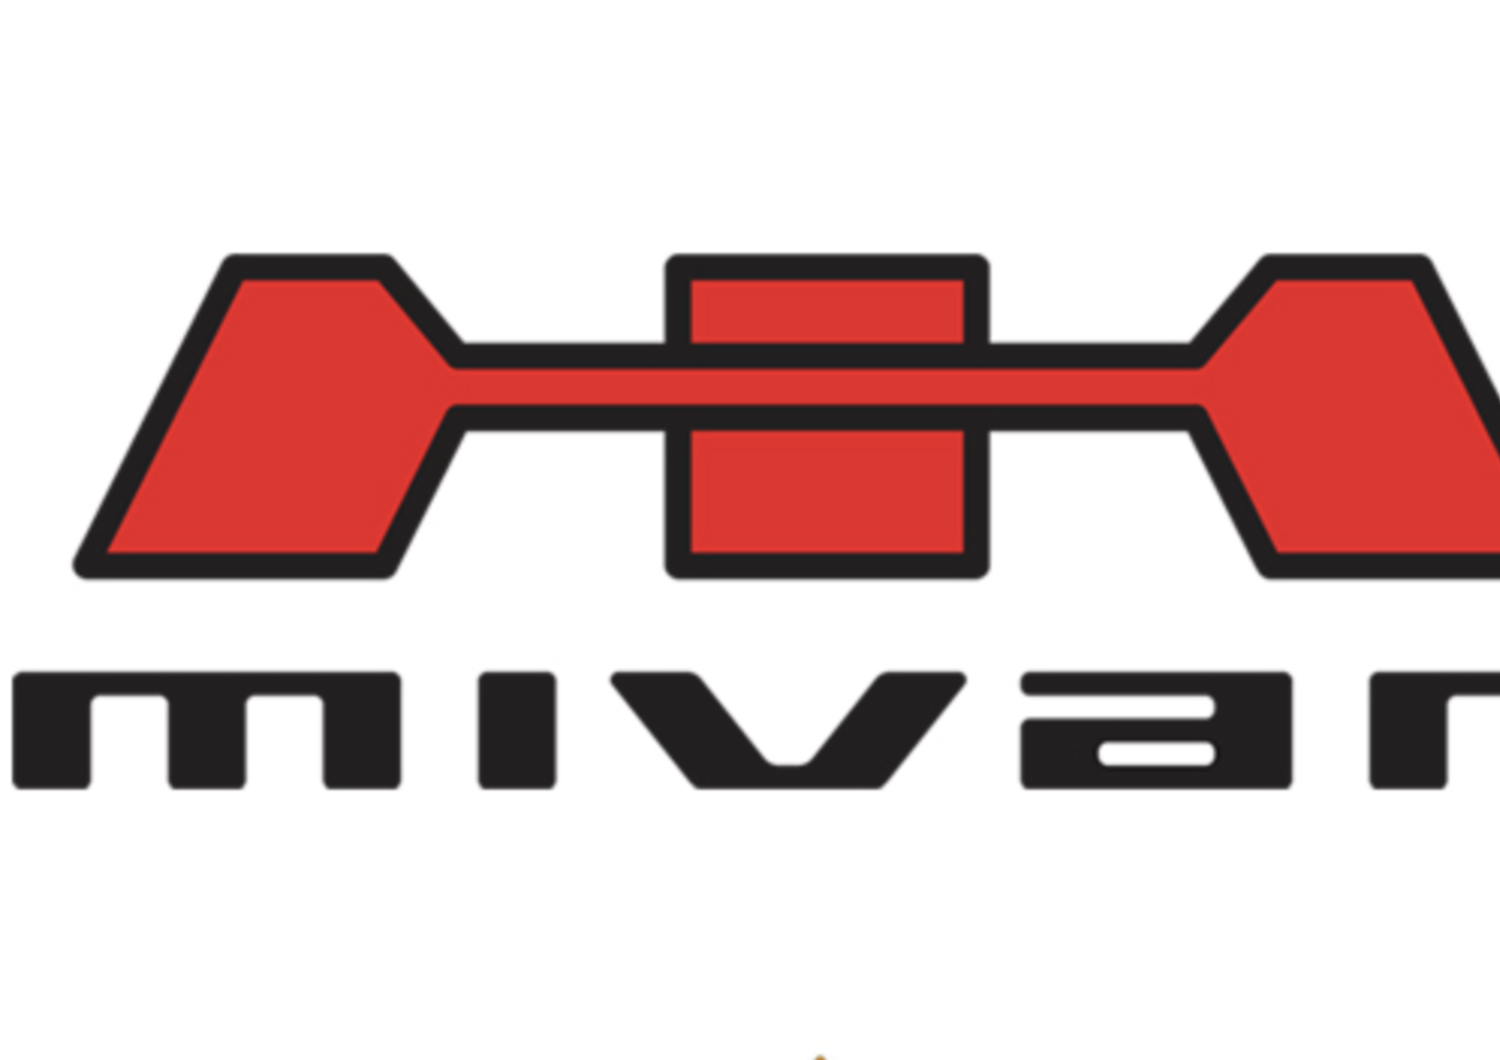 Il logo Mivar